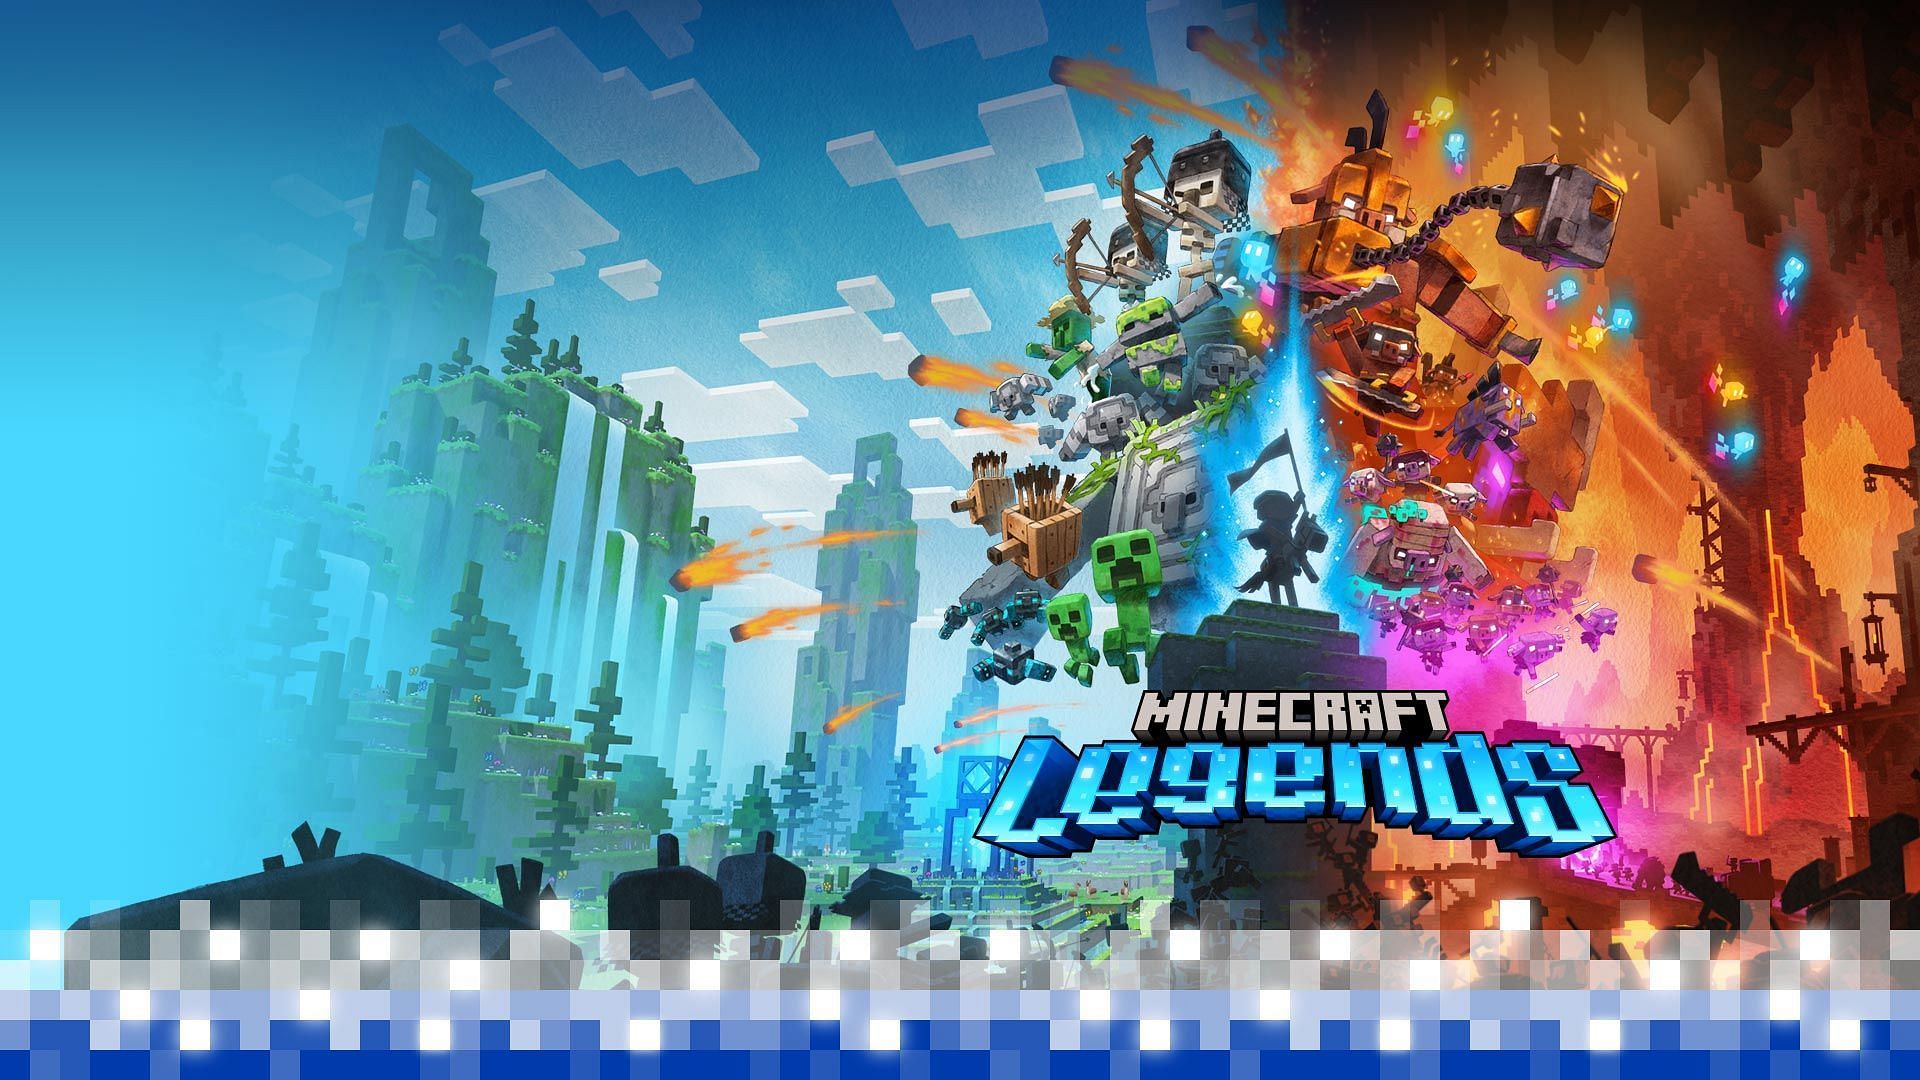 Minecraft Legends: Release Date, Gameplay, Mobs, Platforms, and